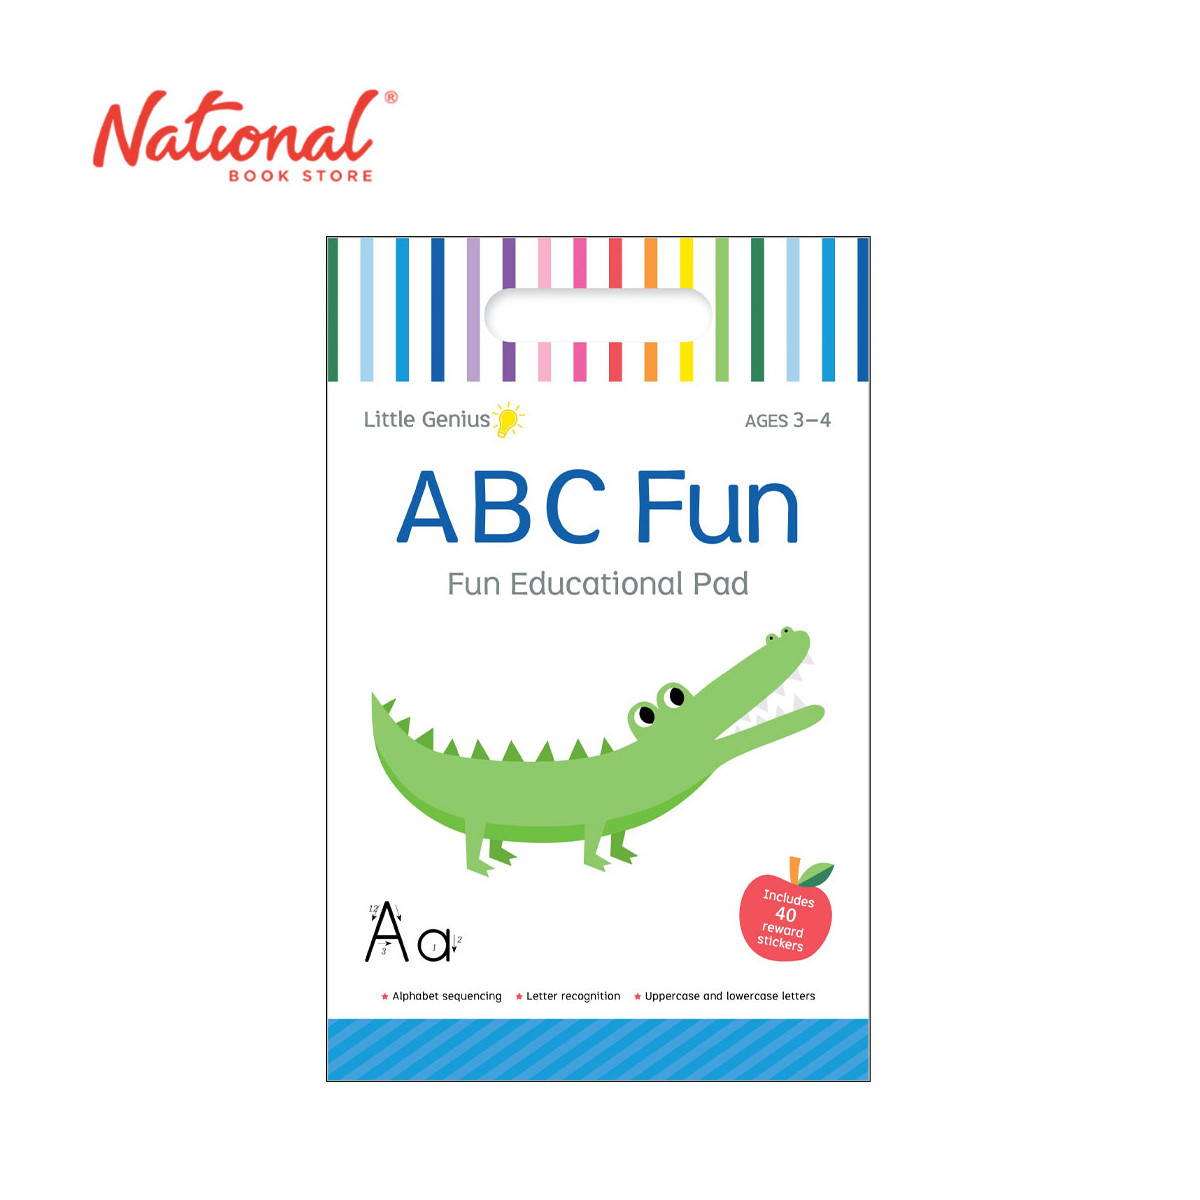 Little Genius Volume 2: ABC Fun Educational Pad - Trade Paperback - Books for Kids - Preschool